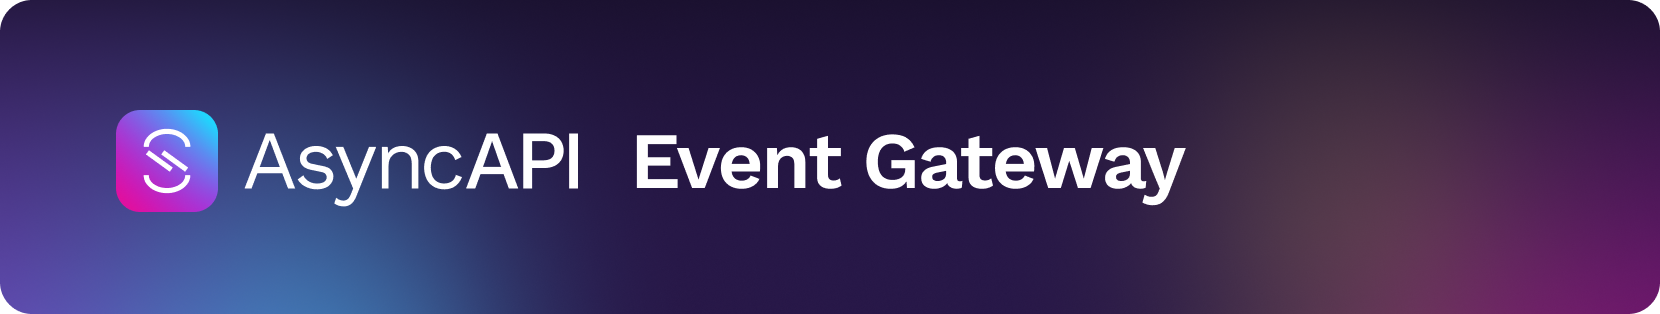 AsyncAPI Event Gateway